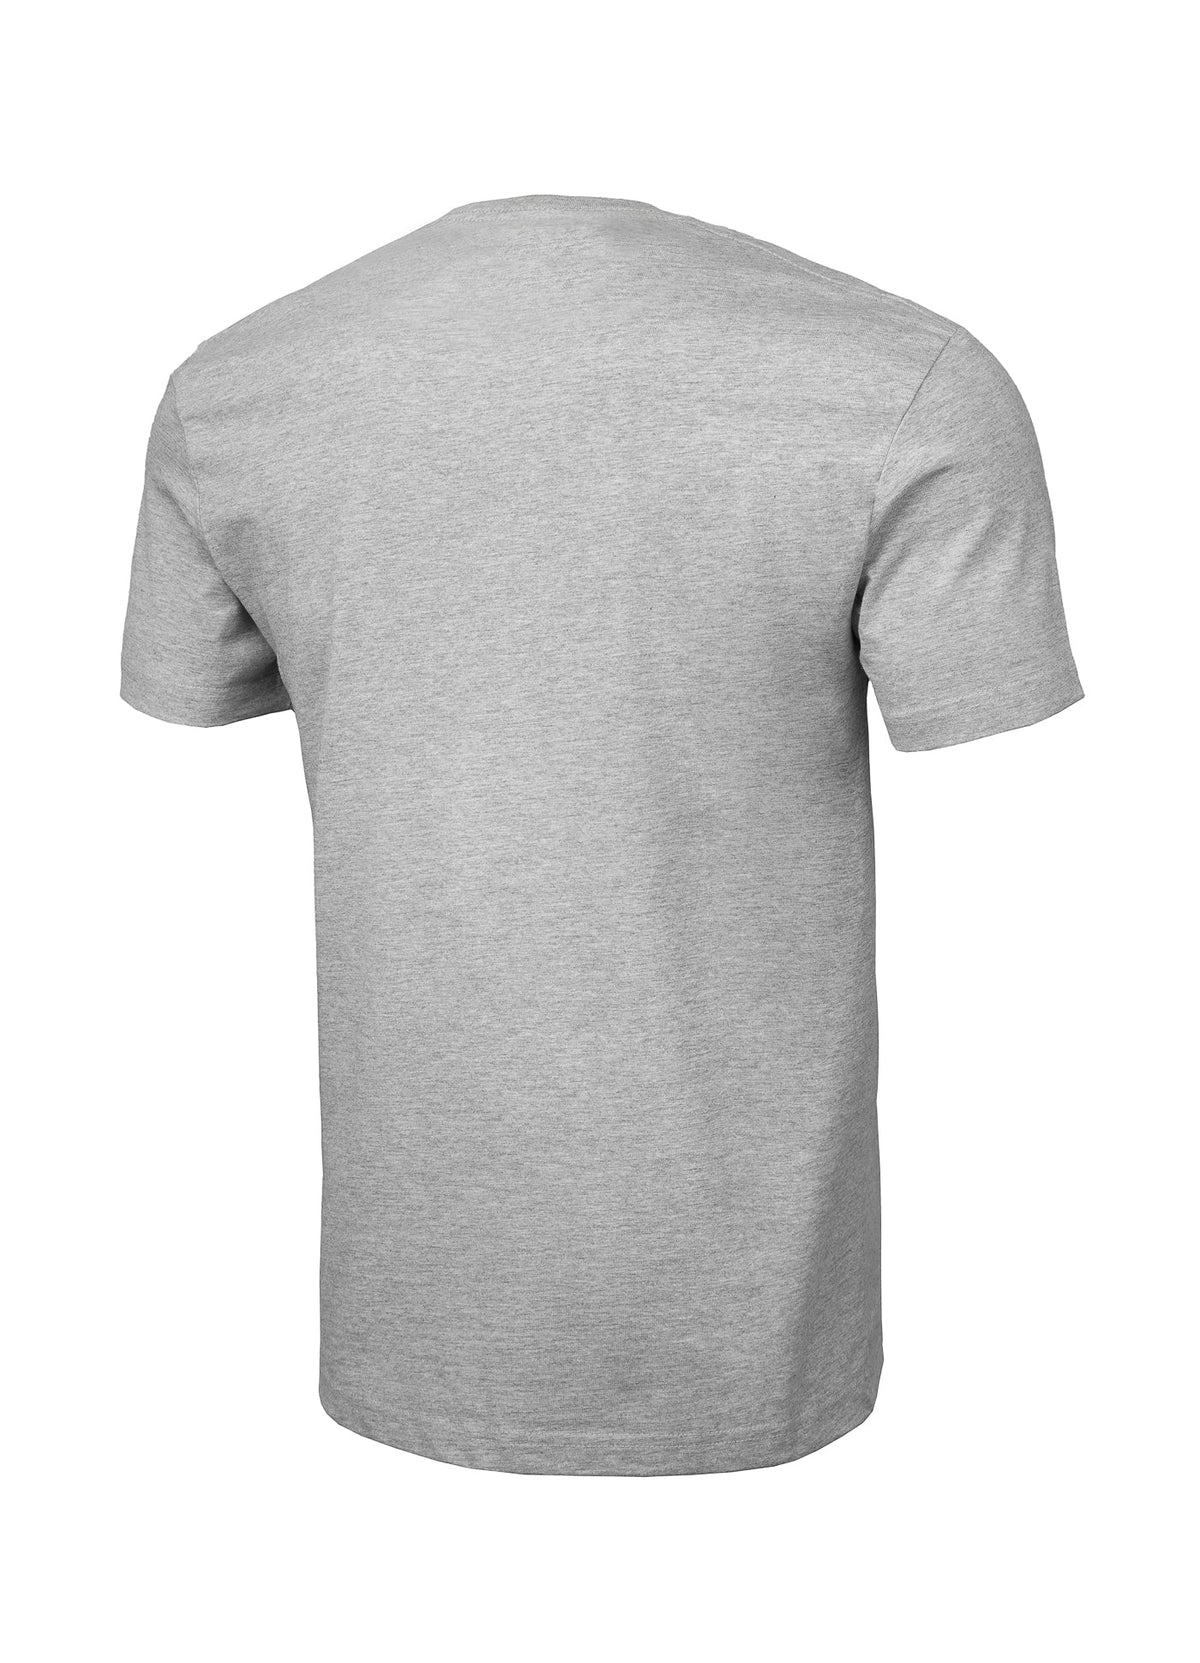 SMALL LOGO 21 T-Shirt  Grey MLG